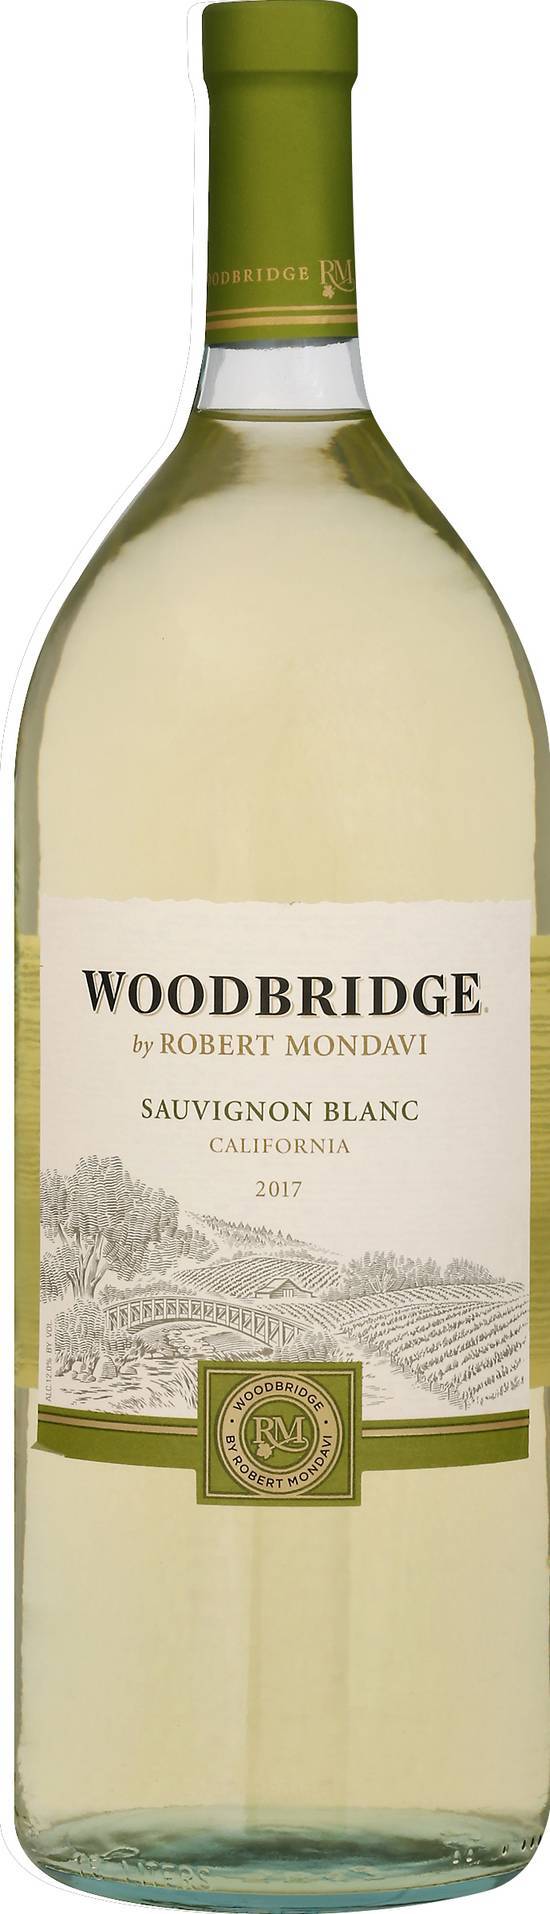 Robert Mondavi Winery Sauvignon Blanc White Wine 2017 (1.5 L)